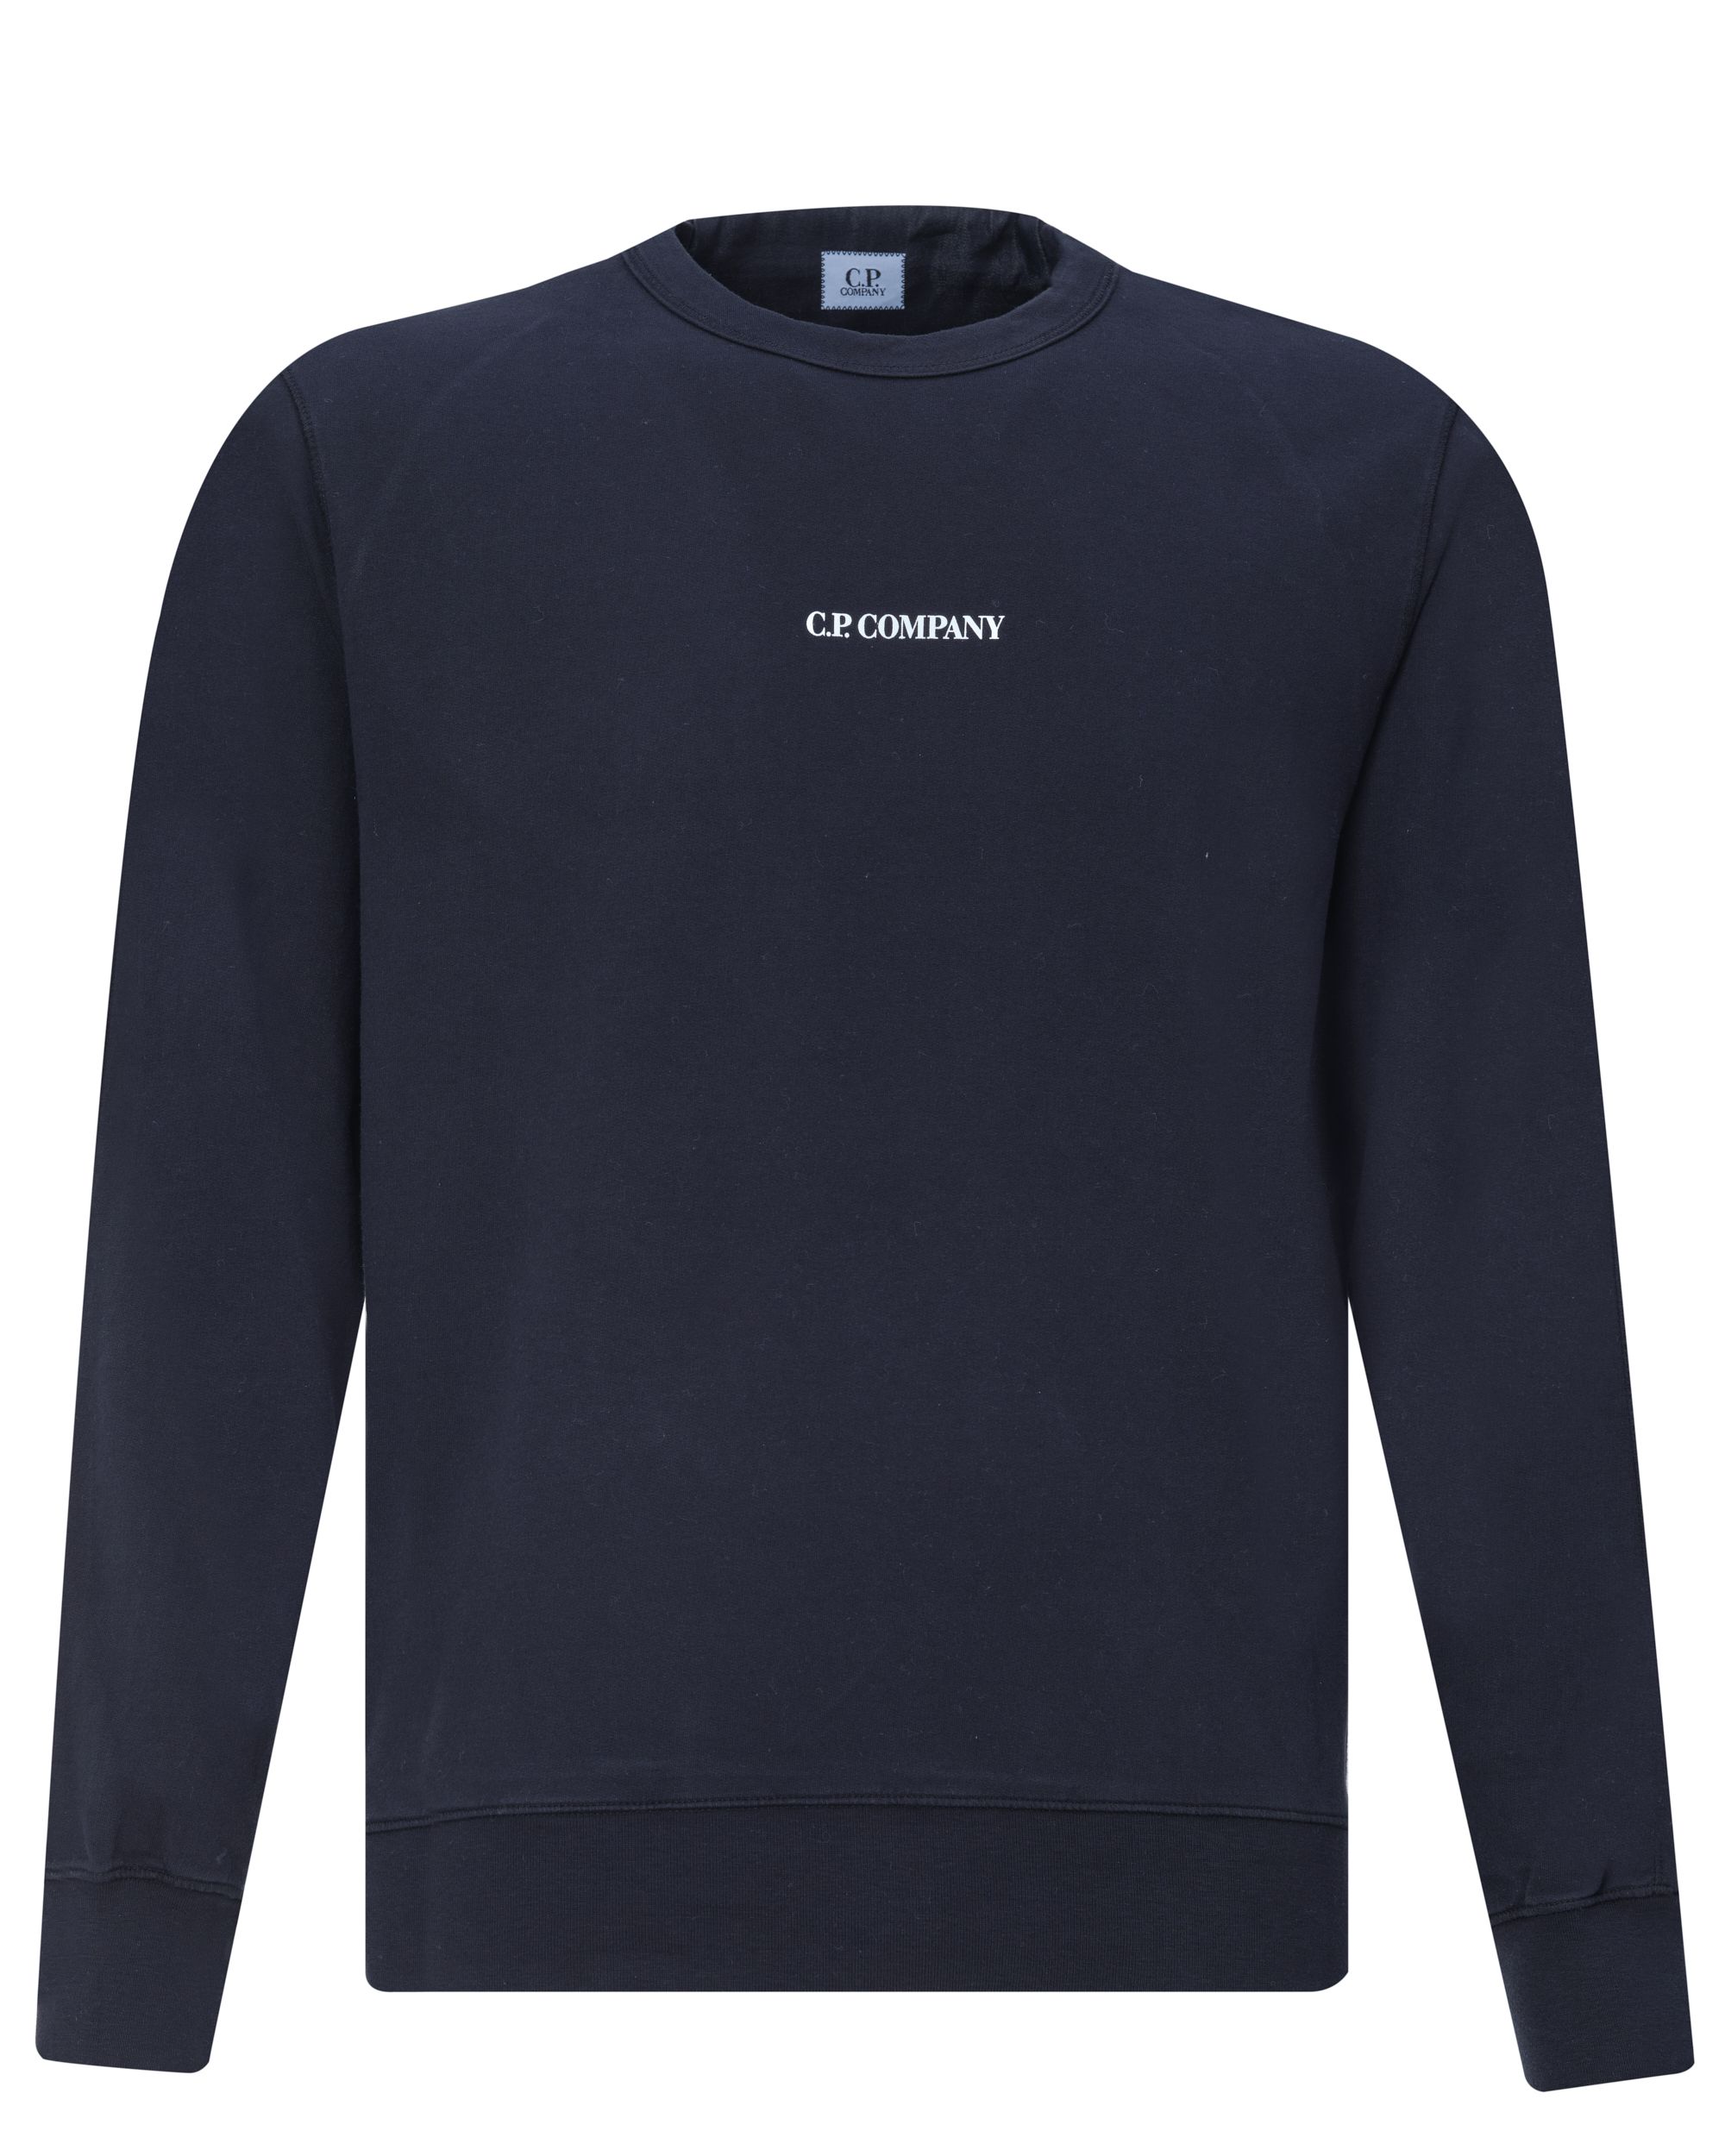 C.P Company Sweater Zwart 078726-001-L